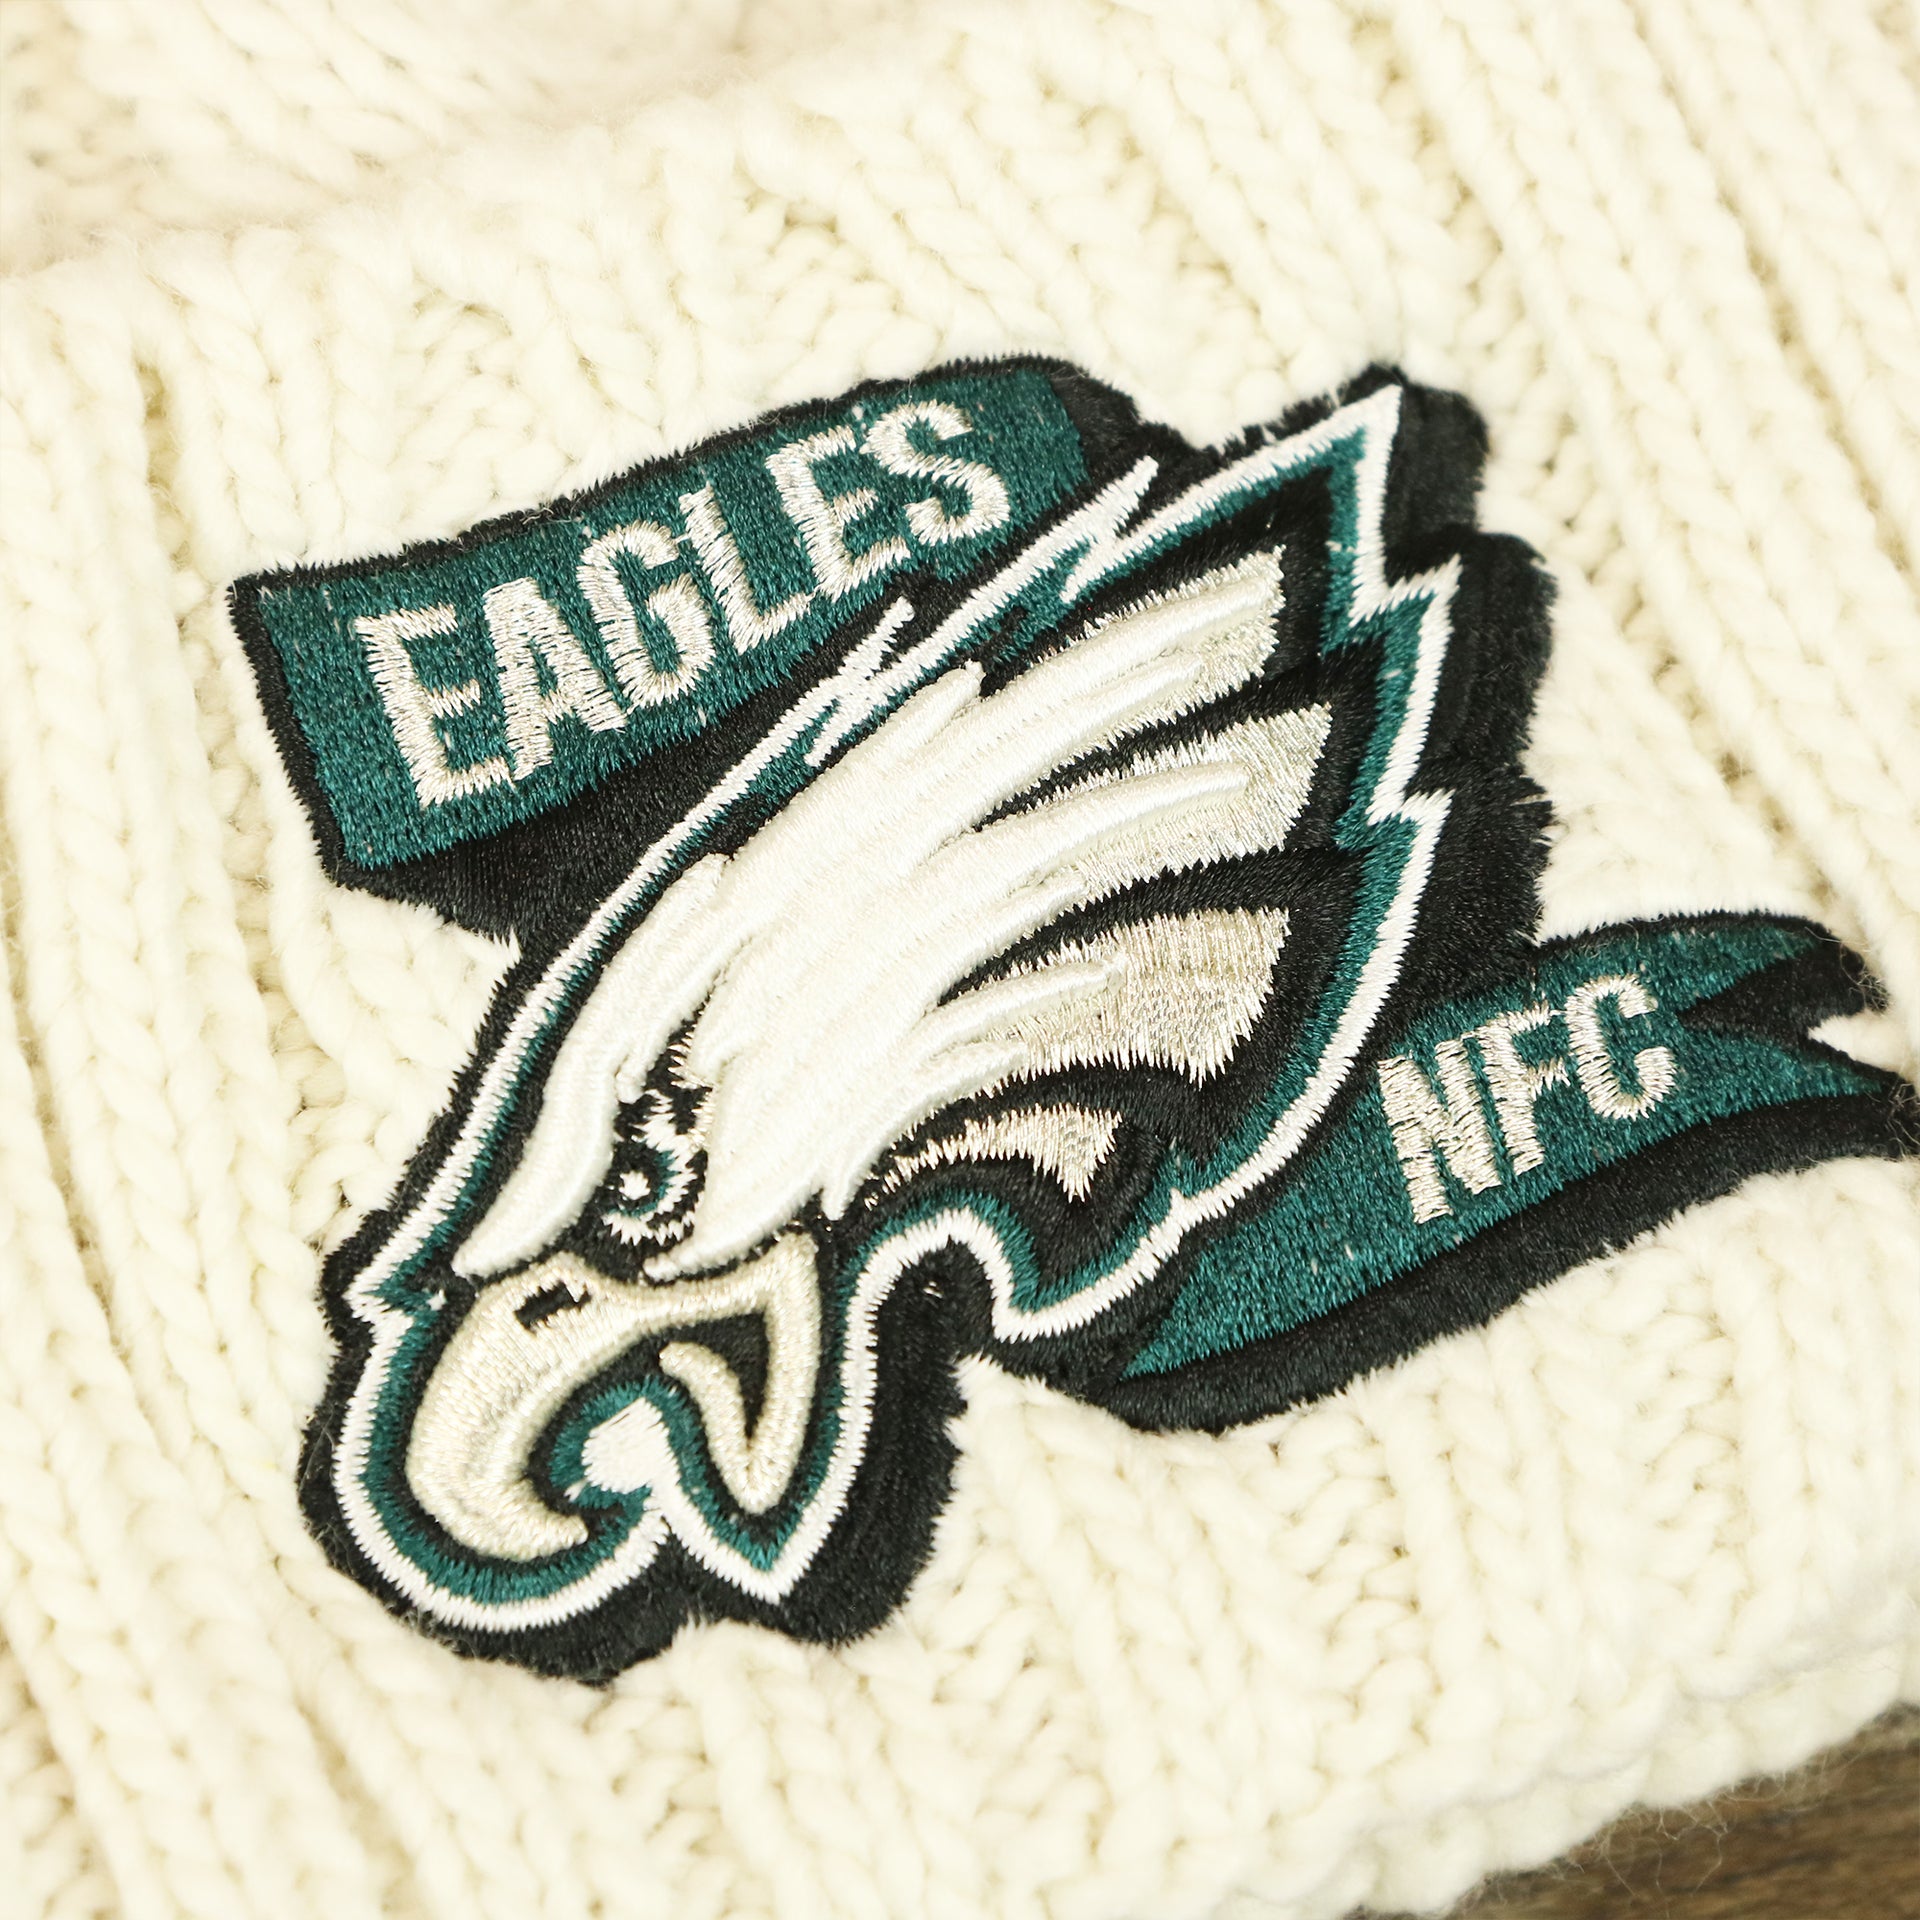 The Eagles NFC Logo on the Women’s Philadelphia Eagles 2022 NFC Cuffed Winter Knit Meeko Pom Pom Beanie | Women’s White Winter Beanies